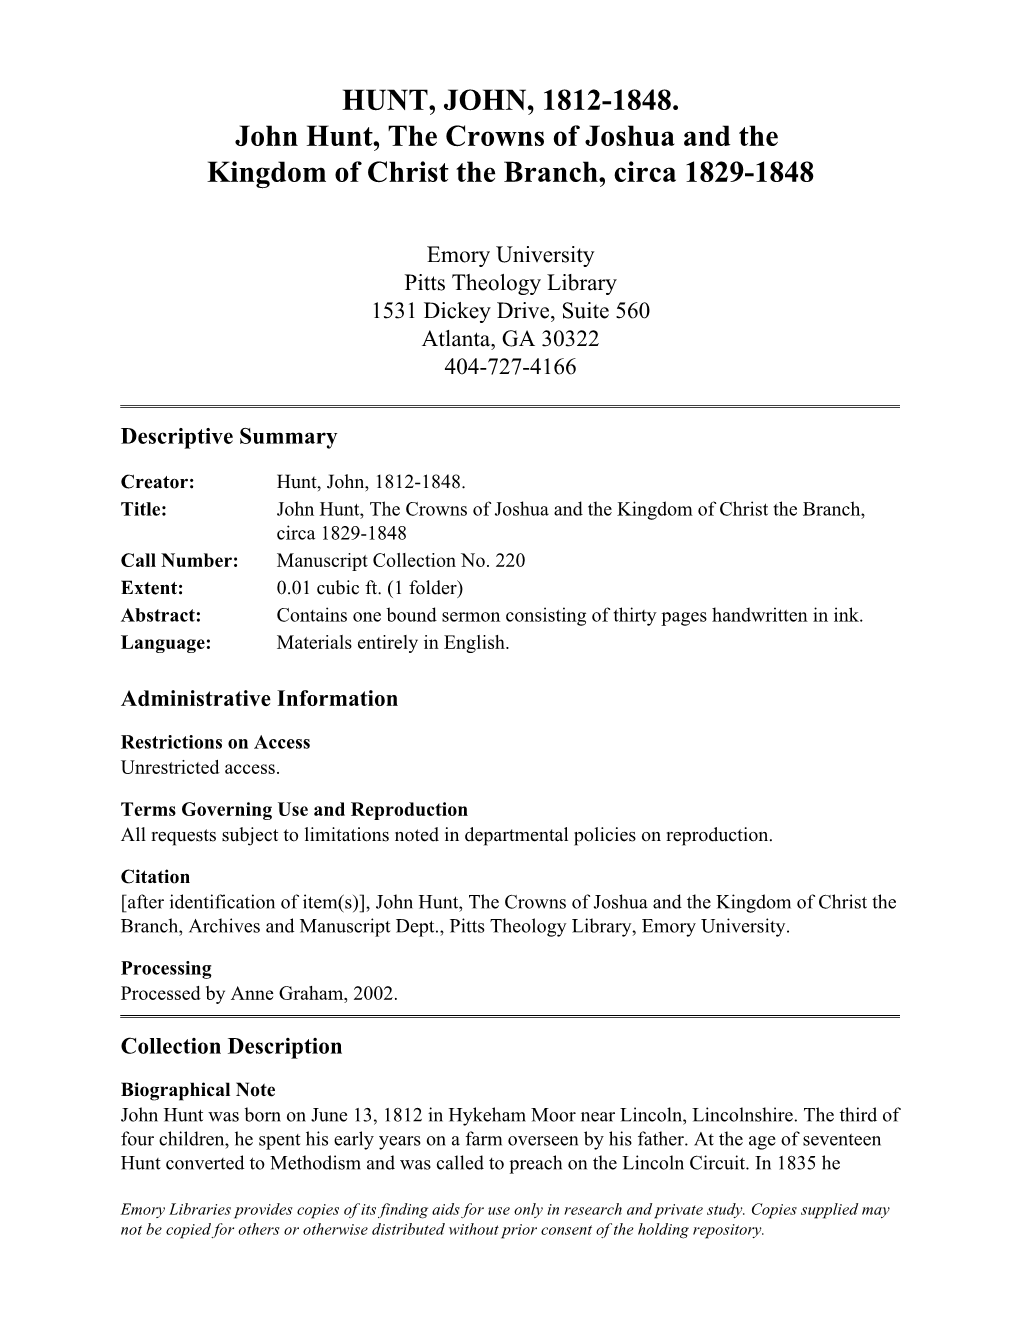 HUNT, JOHN, 1812-1848. John Hunt, the Crowns of Joshua and the Kingdom of Christ the Branch, Circa 1829-1848